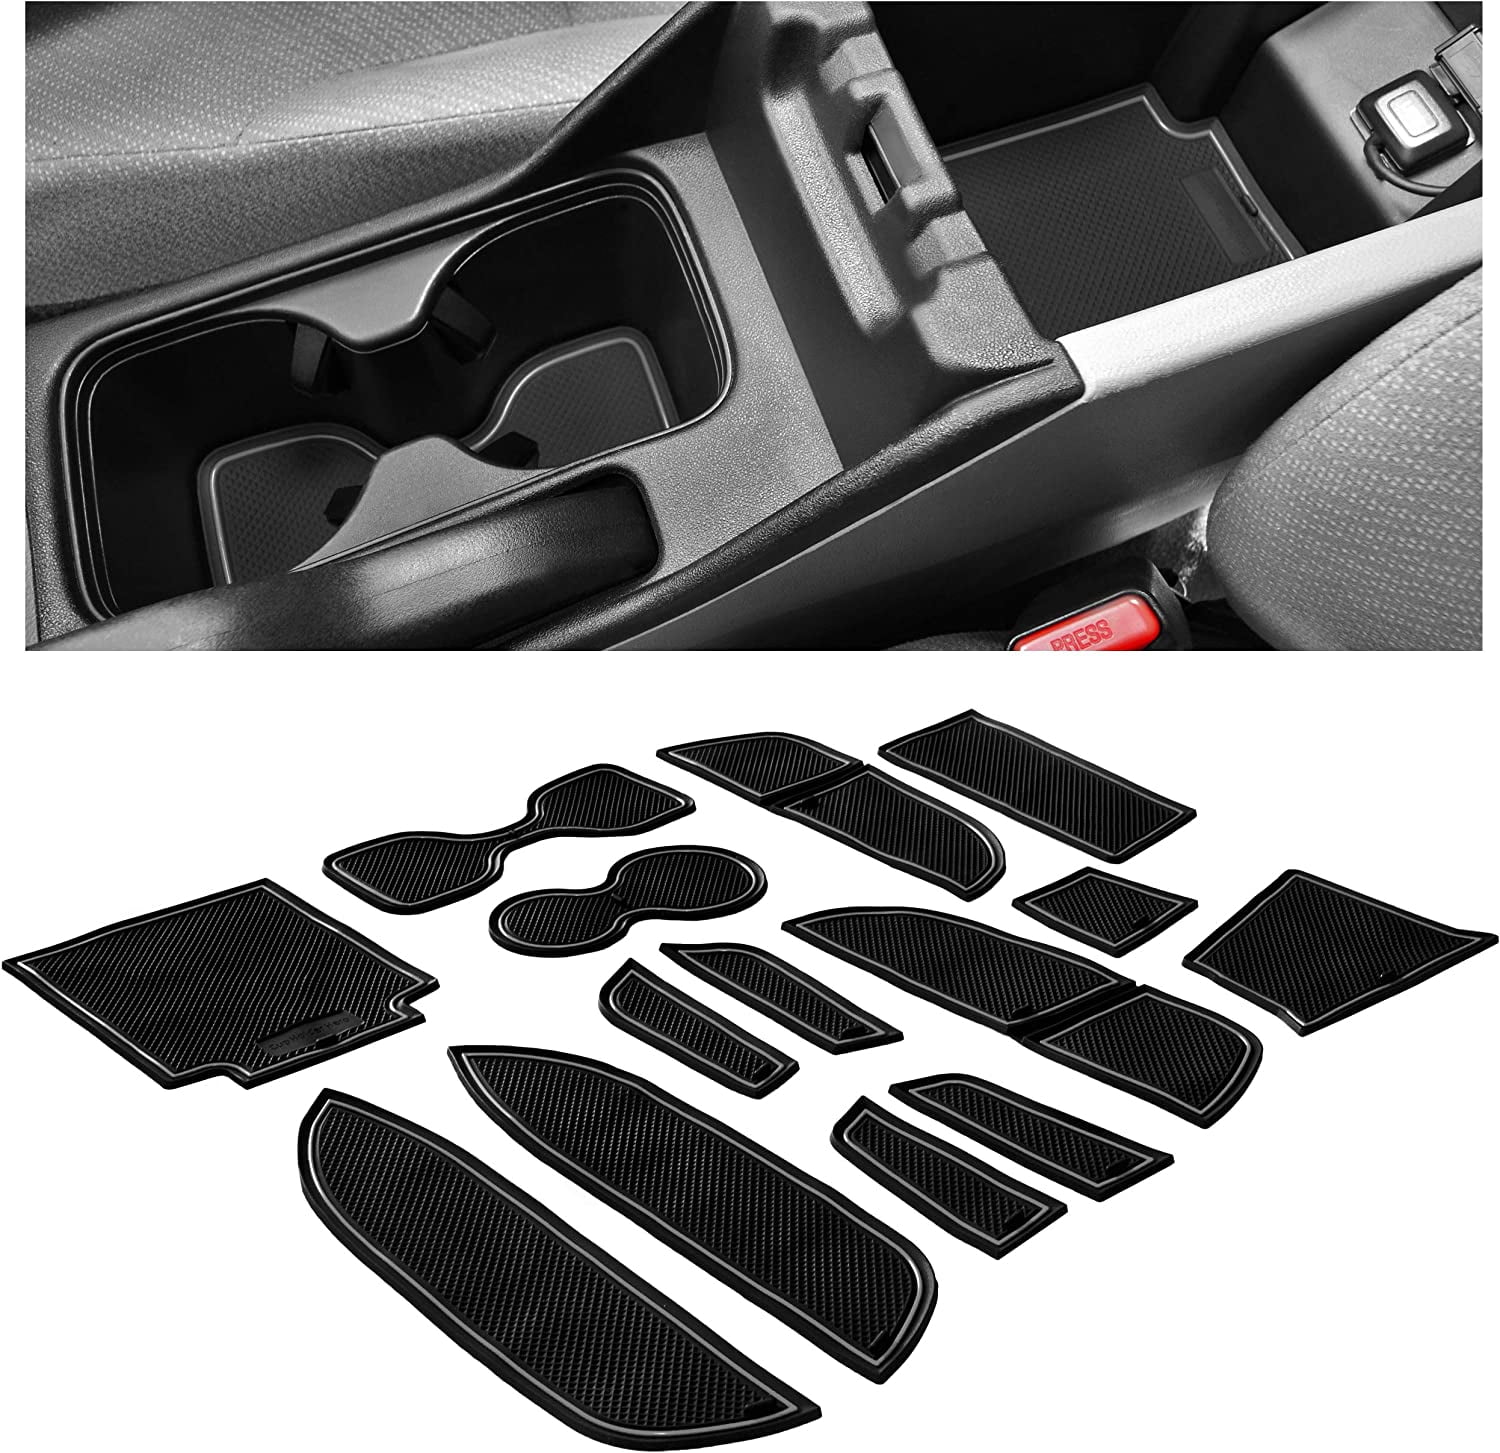 2X Car Cup Holder Insert Coaster Anti Slip Interior Accessories Cup Mats  Rubber